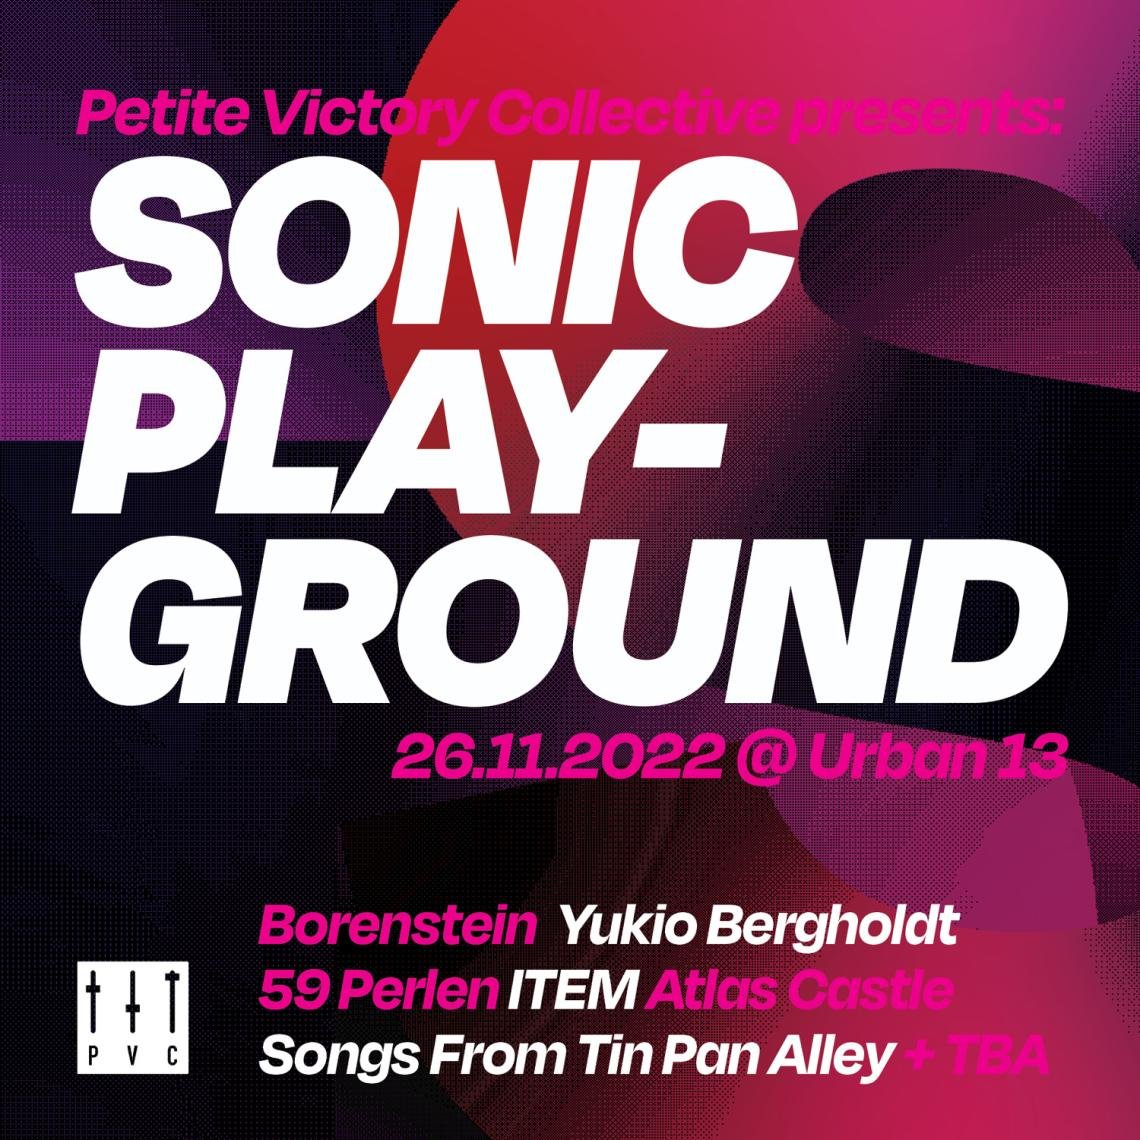 PVC_sonic_playground_1500x1500_20220925.jpg